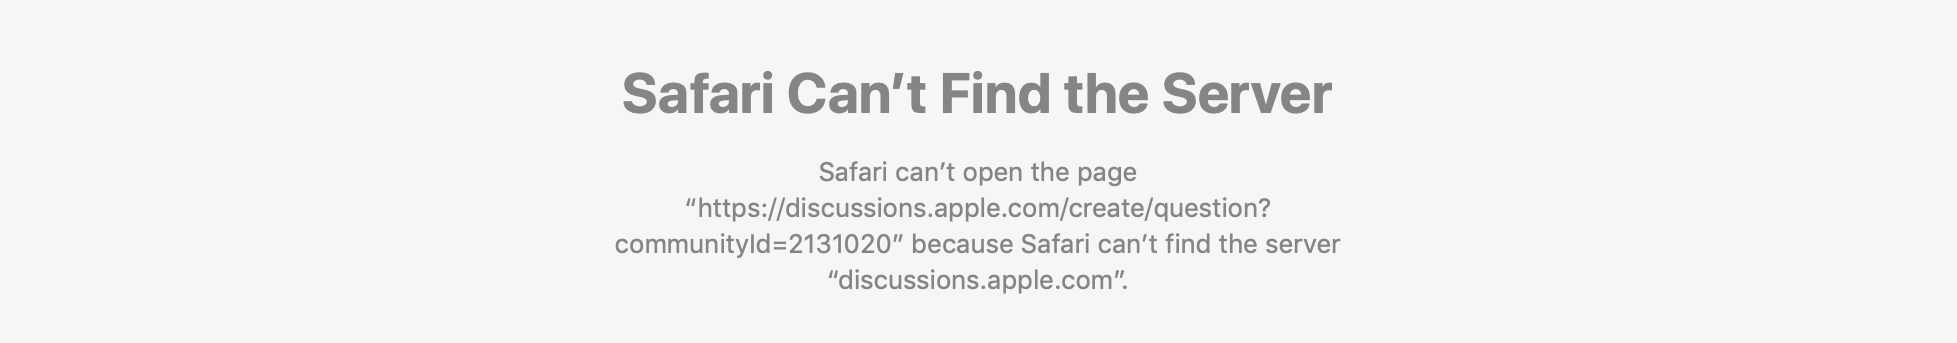 safari kan server niet vinden mac